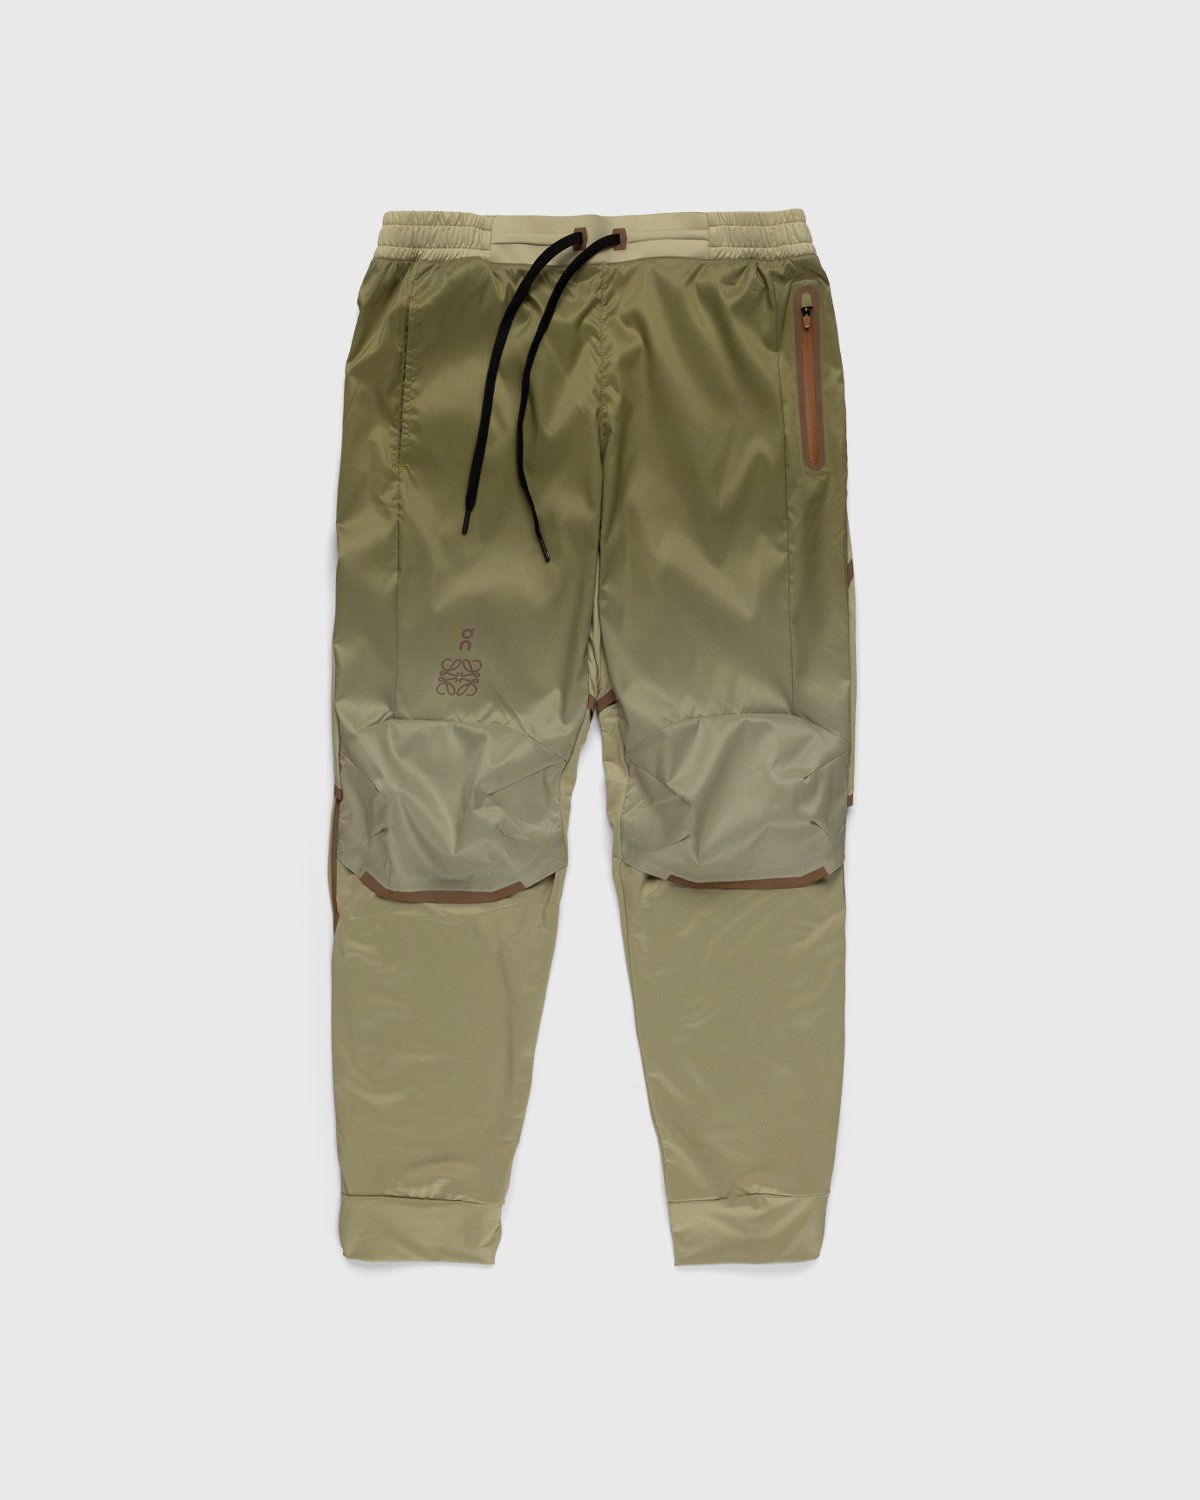 Loewe x On – Men's Technical Running Pants Gradient Khaki - Active Pants - Green - Image 1